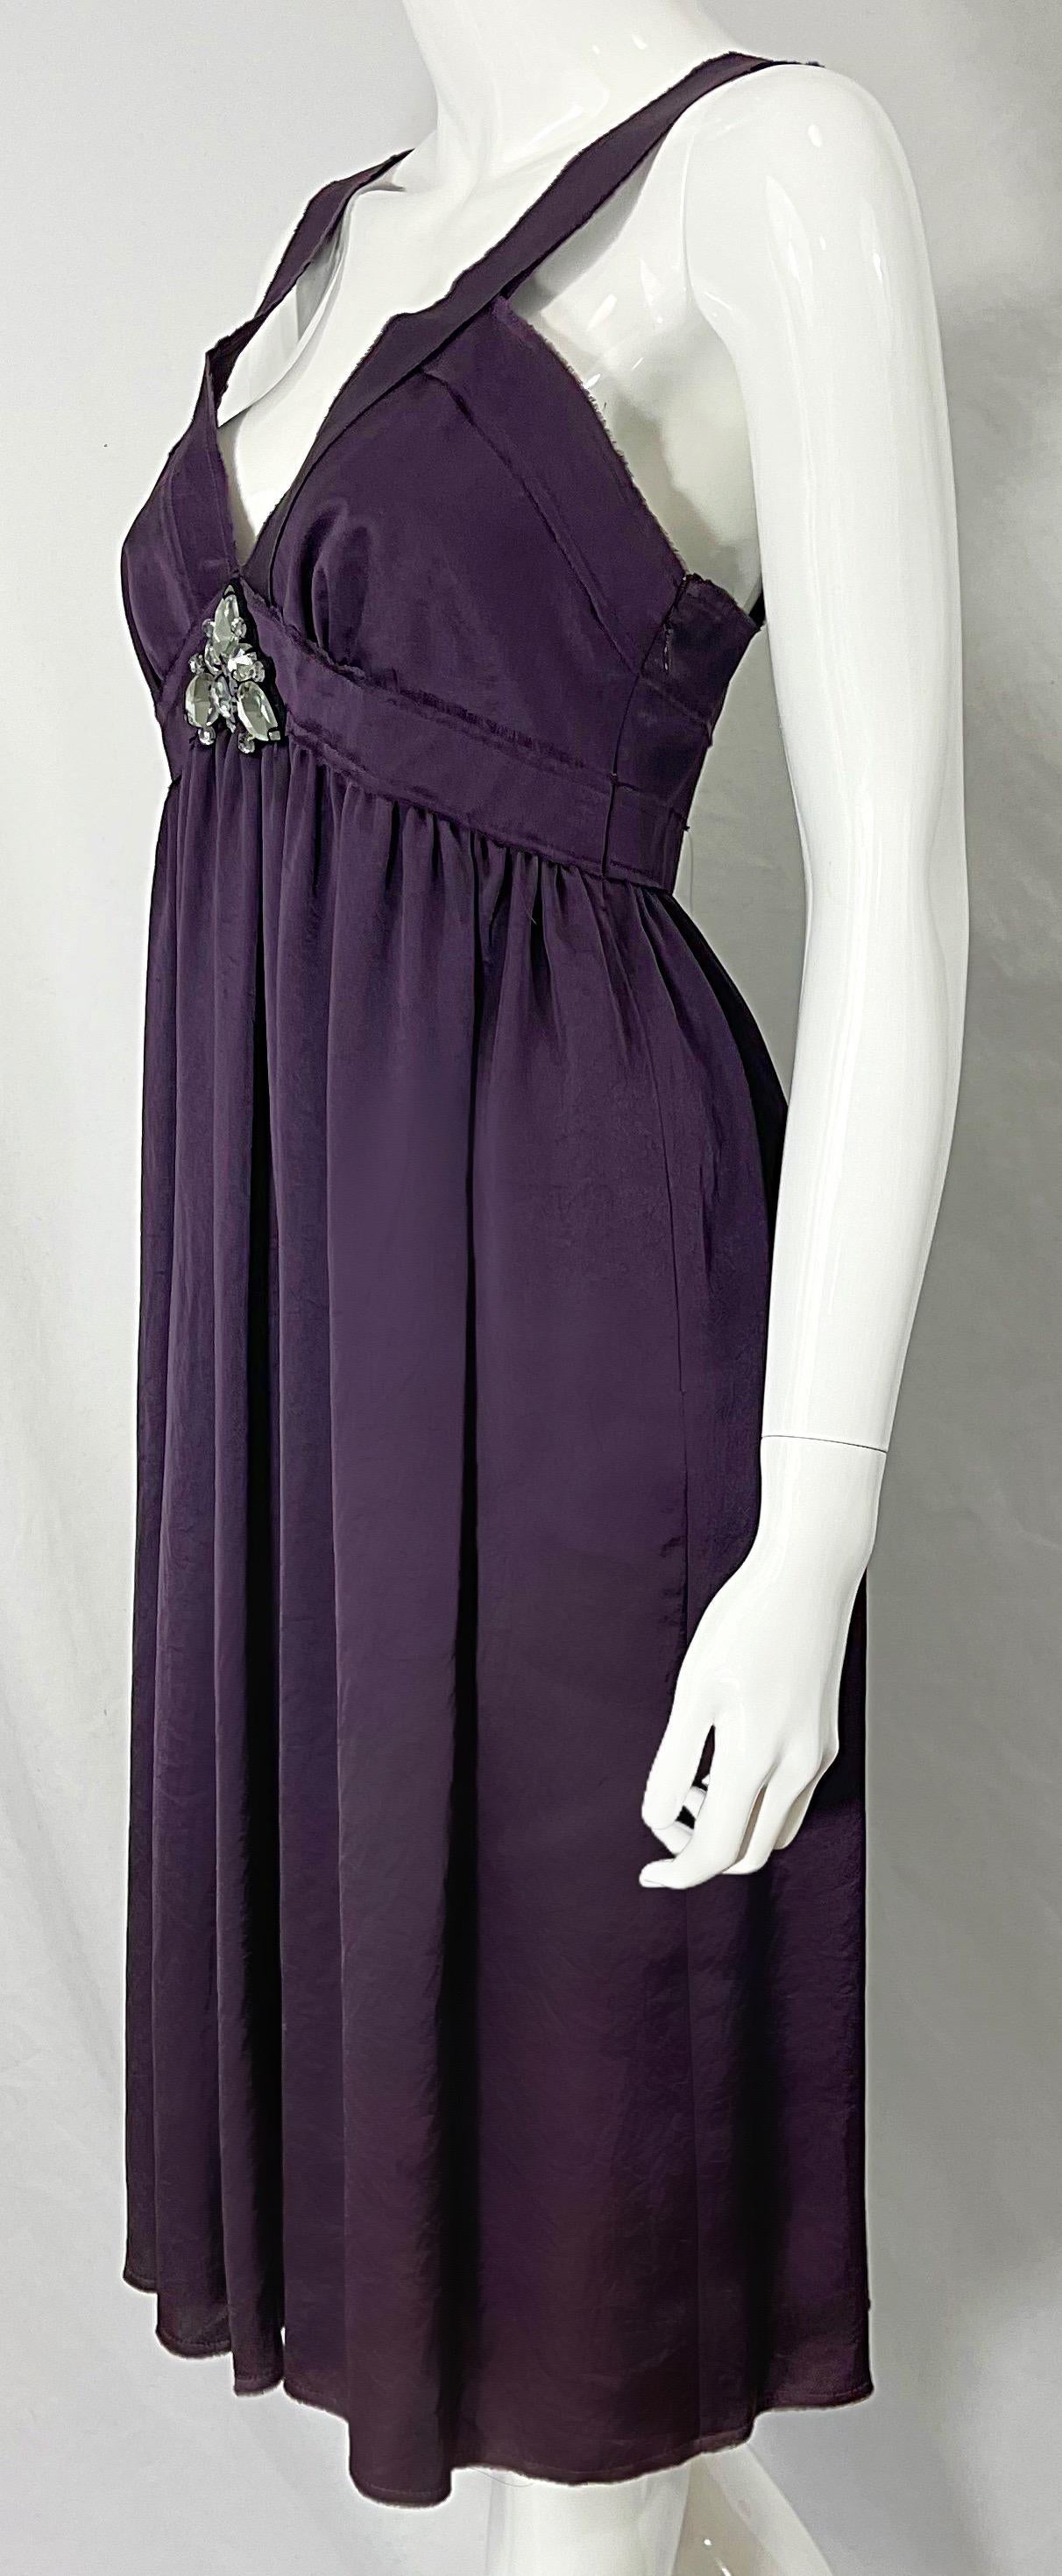 Women's Lanvin S/S 2007 Alber Elbaz Sz 38 Purple Rhinestone Encrusted Empire Waist Dress For Sale